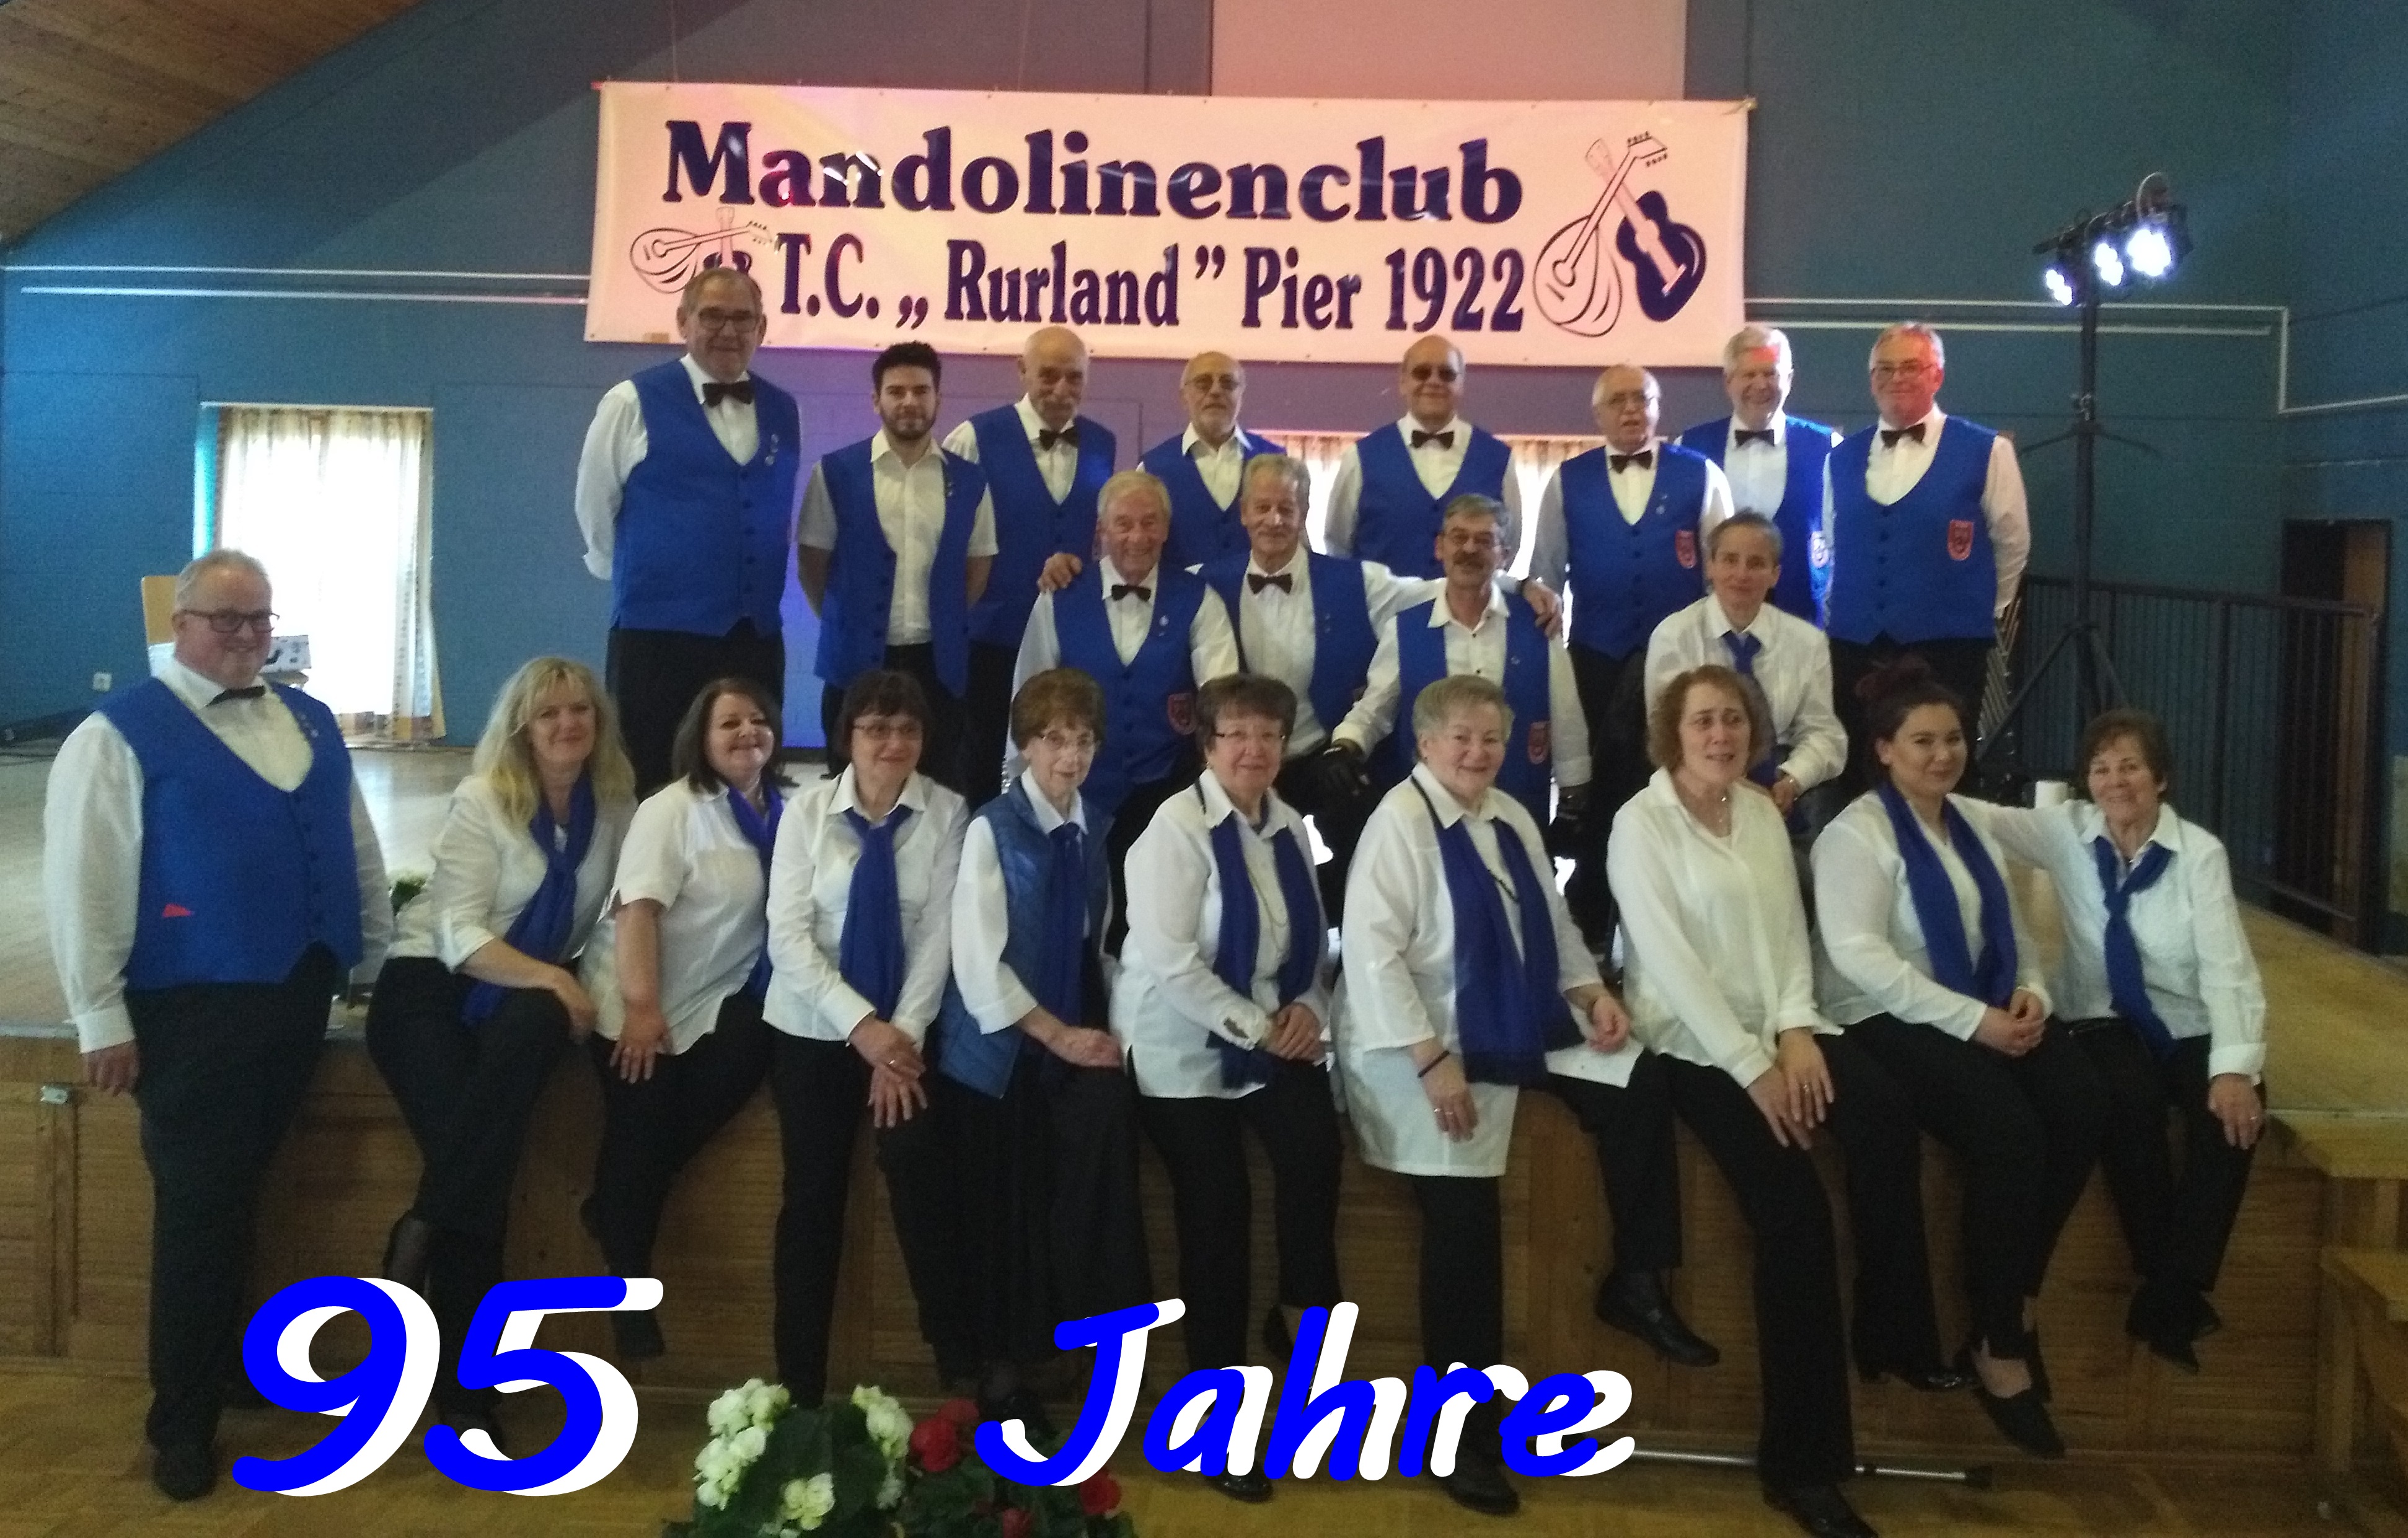 Die "Rurland - Singers" im Kreise des Mandolinenclub T. C. "Rurland" Pier 1922